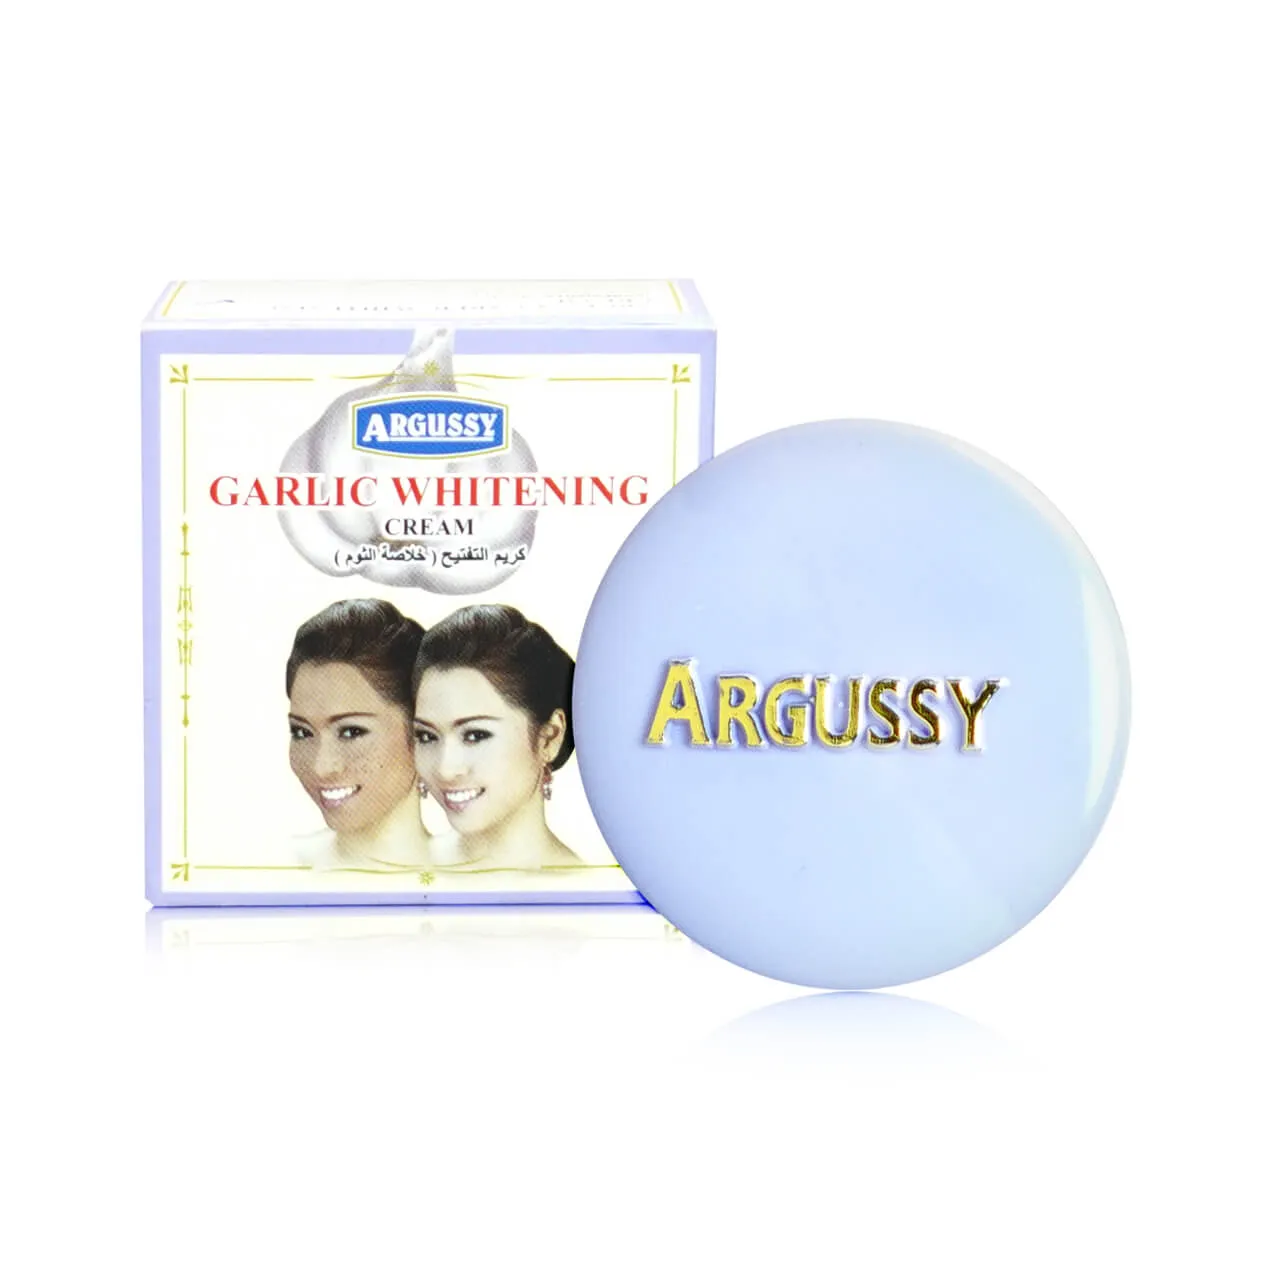 Argussy Whitening Garlic Cream 4g